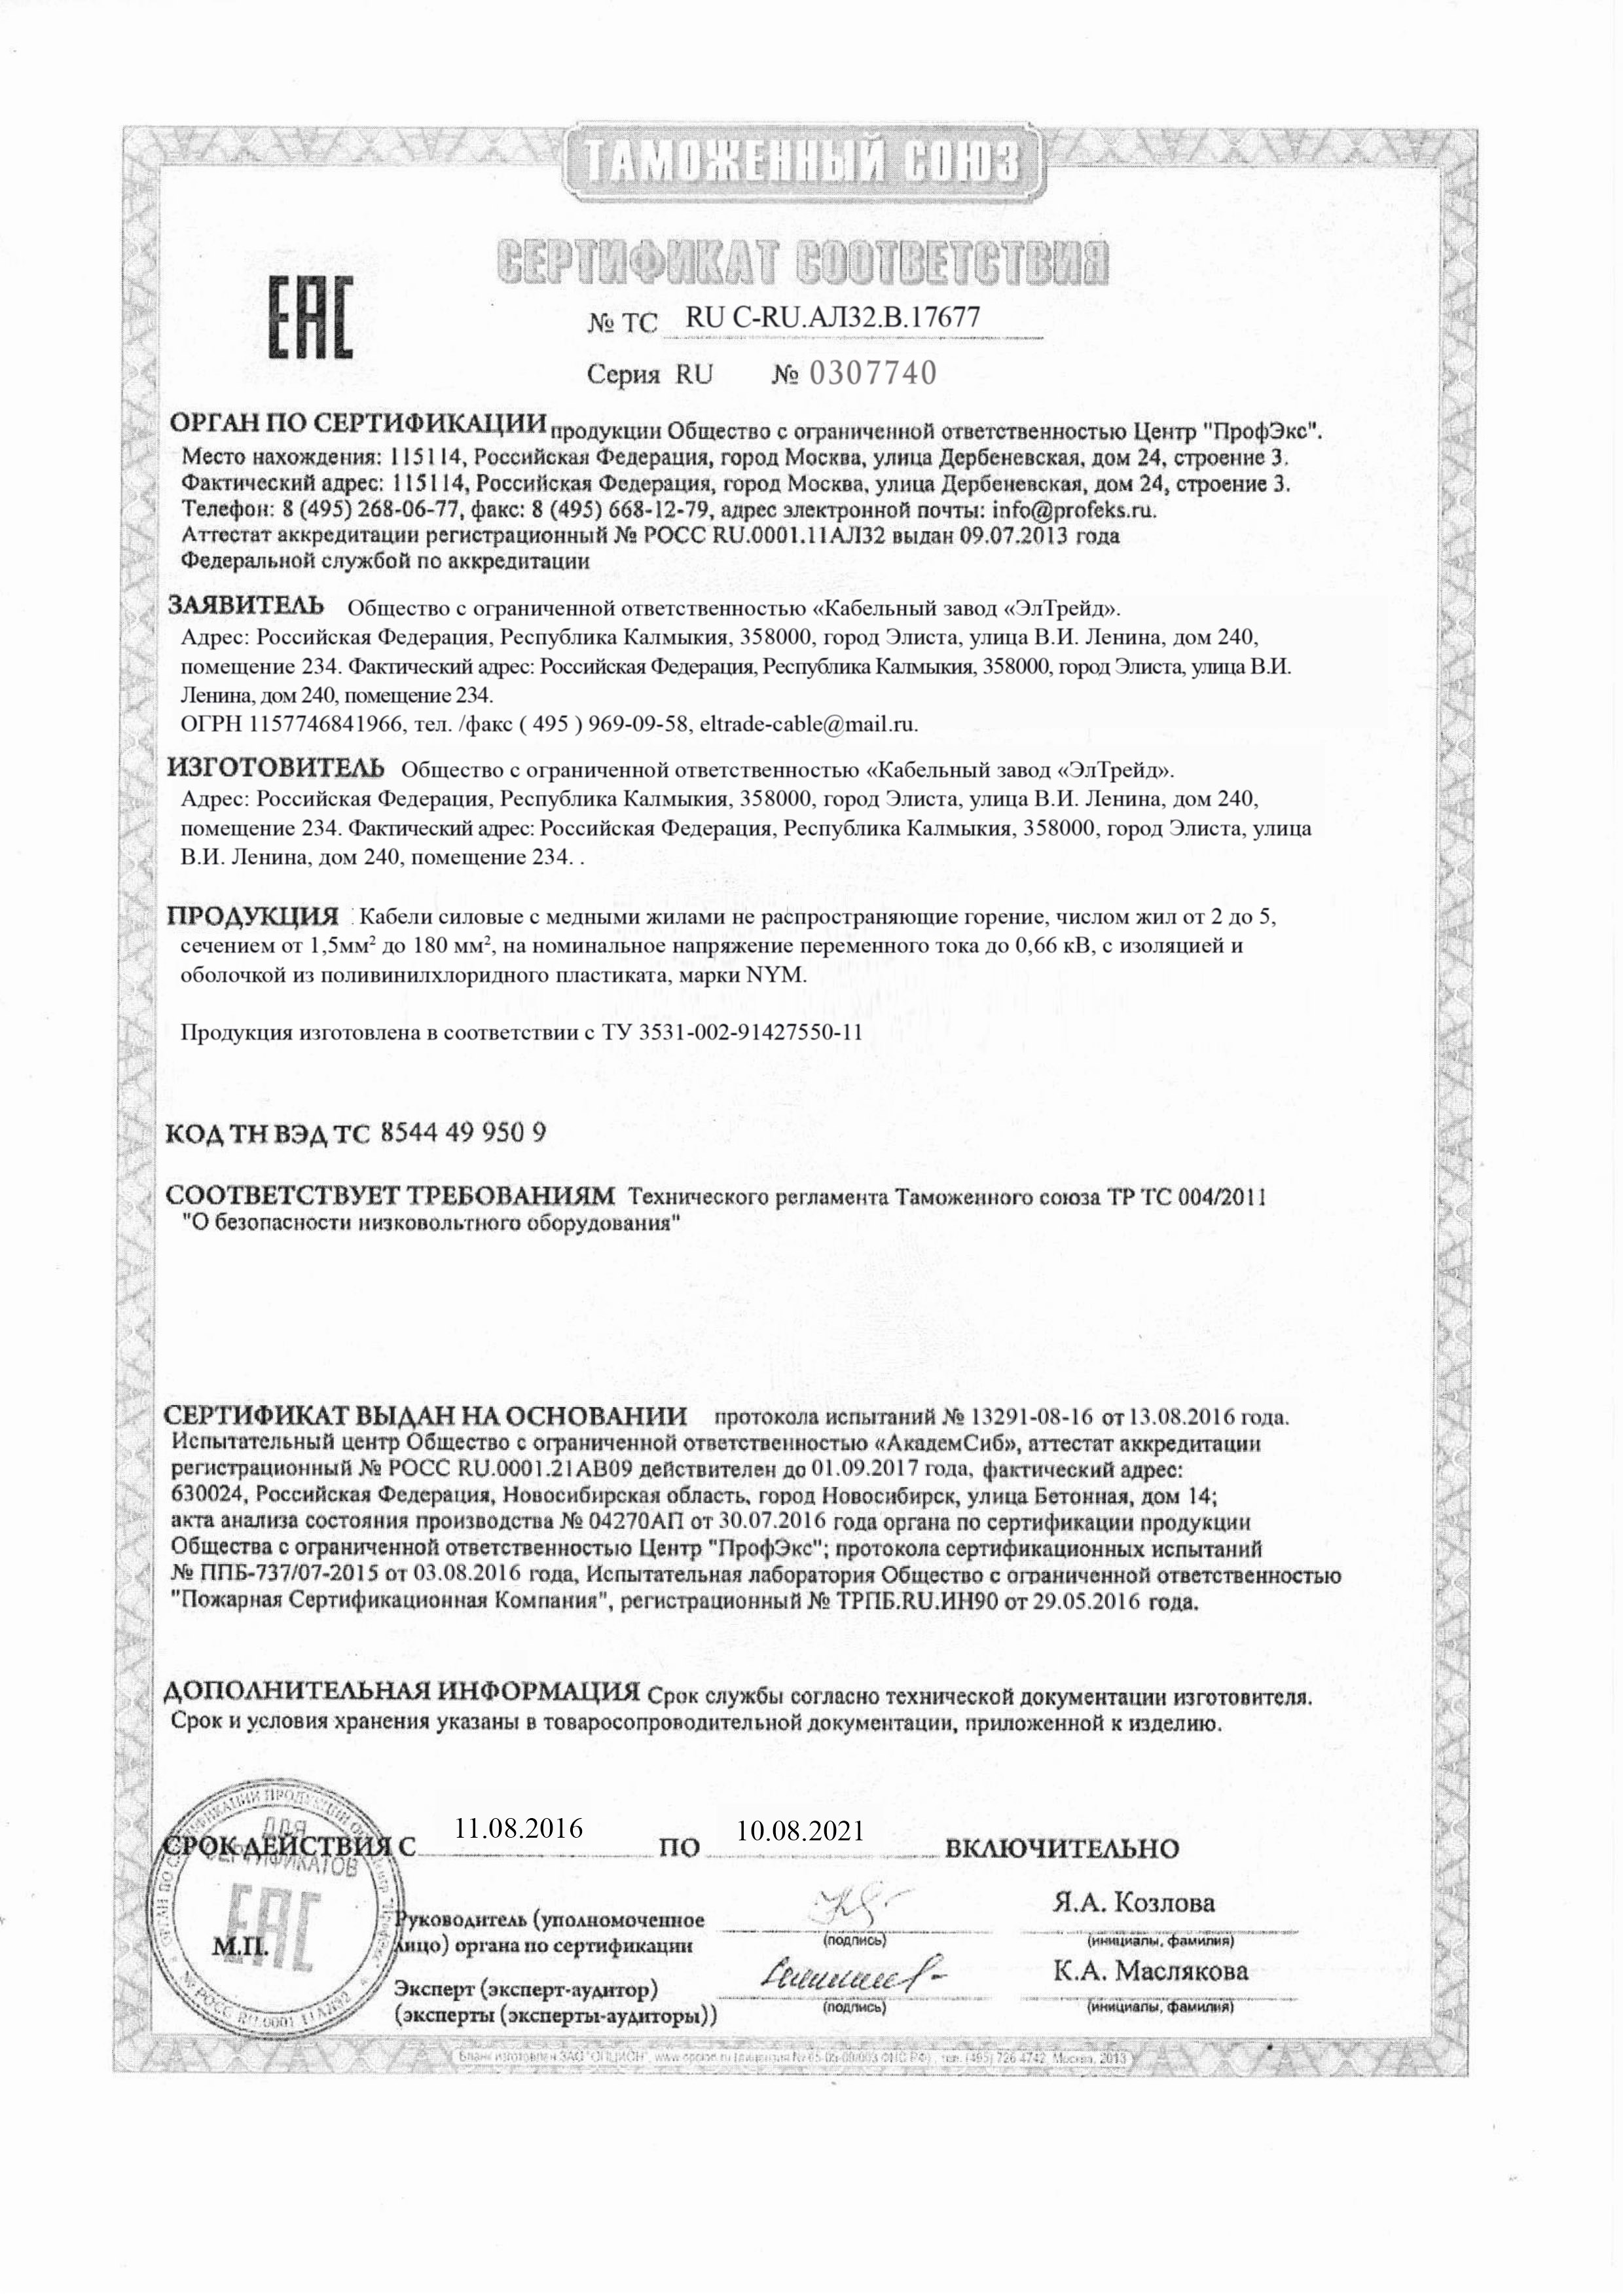 сертификат соответствия на кабель канал электропласт